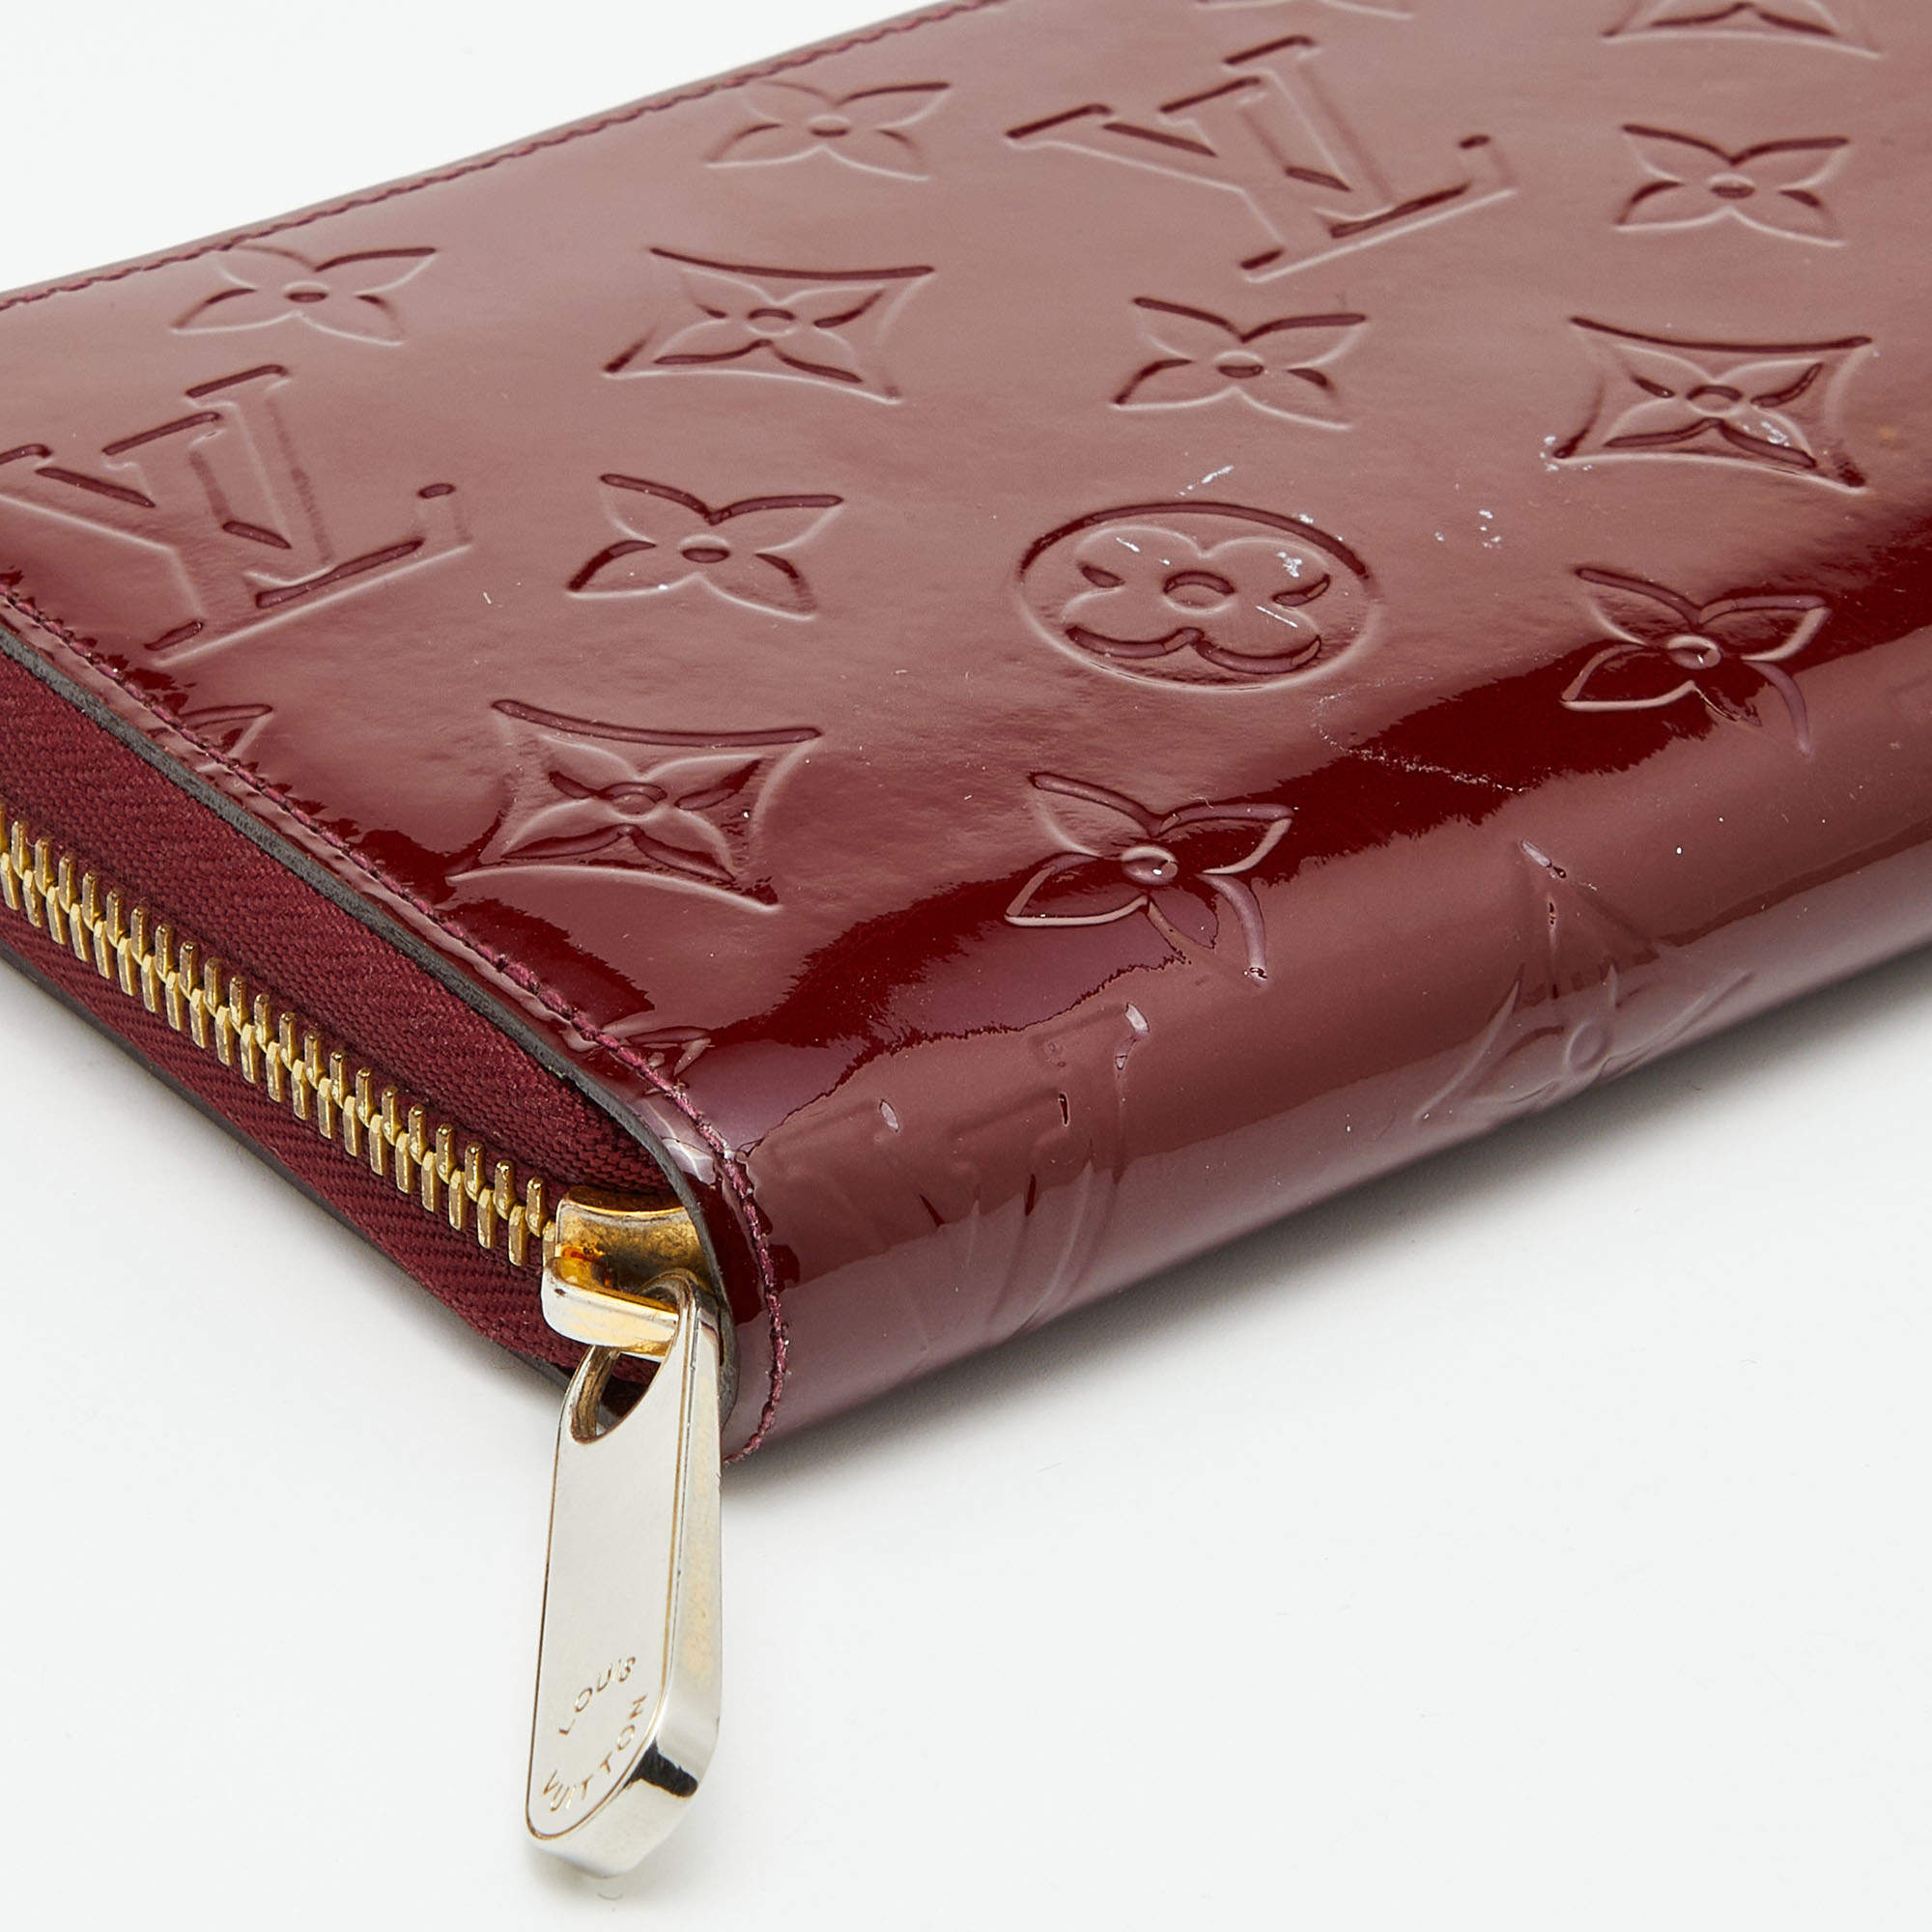 Wallet Louis Vuitton Zippy Pink Vernis Monogram 122120339 - Heritage Estate  Jewelry